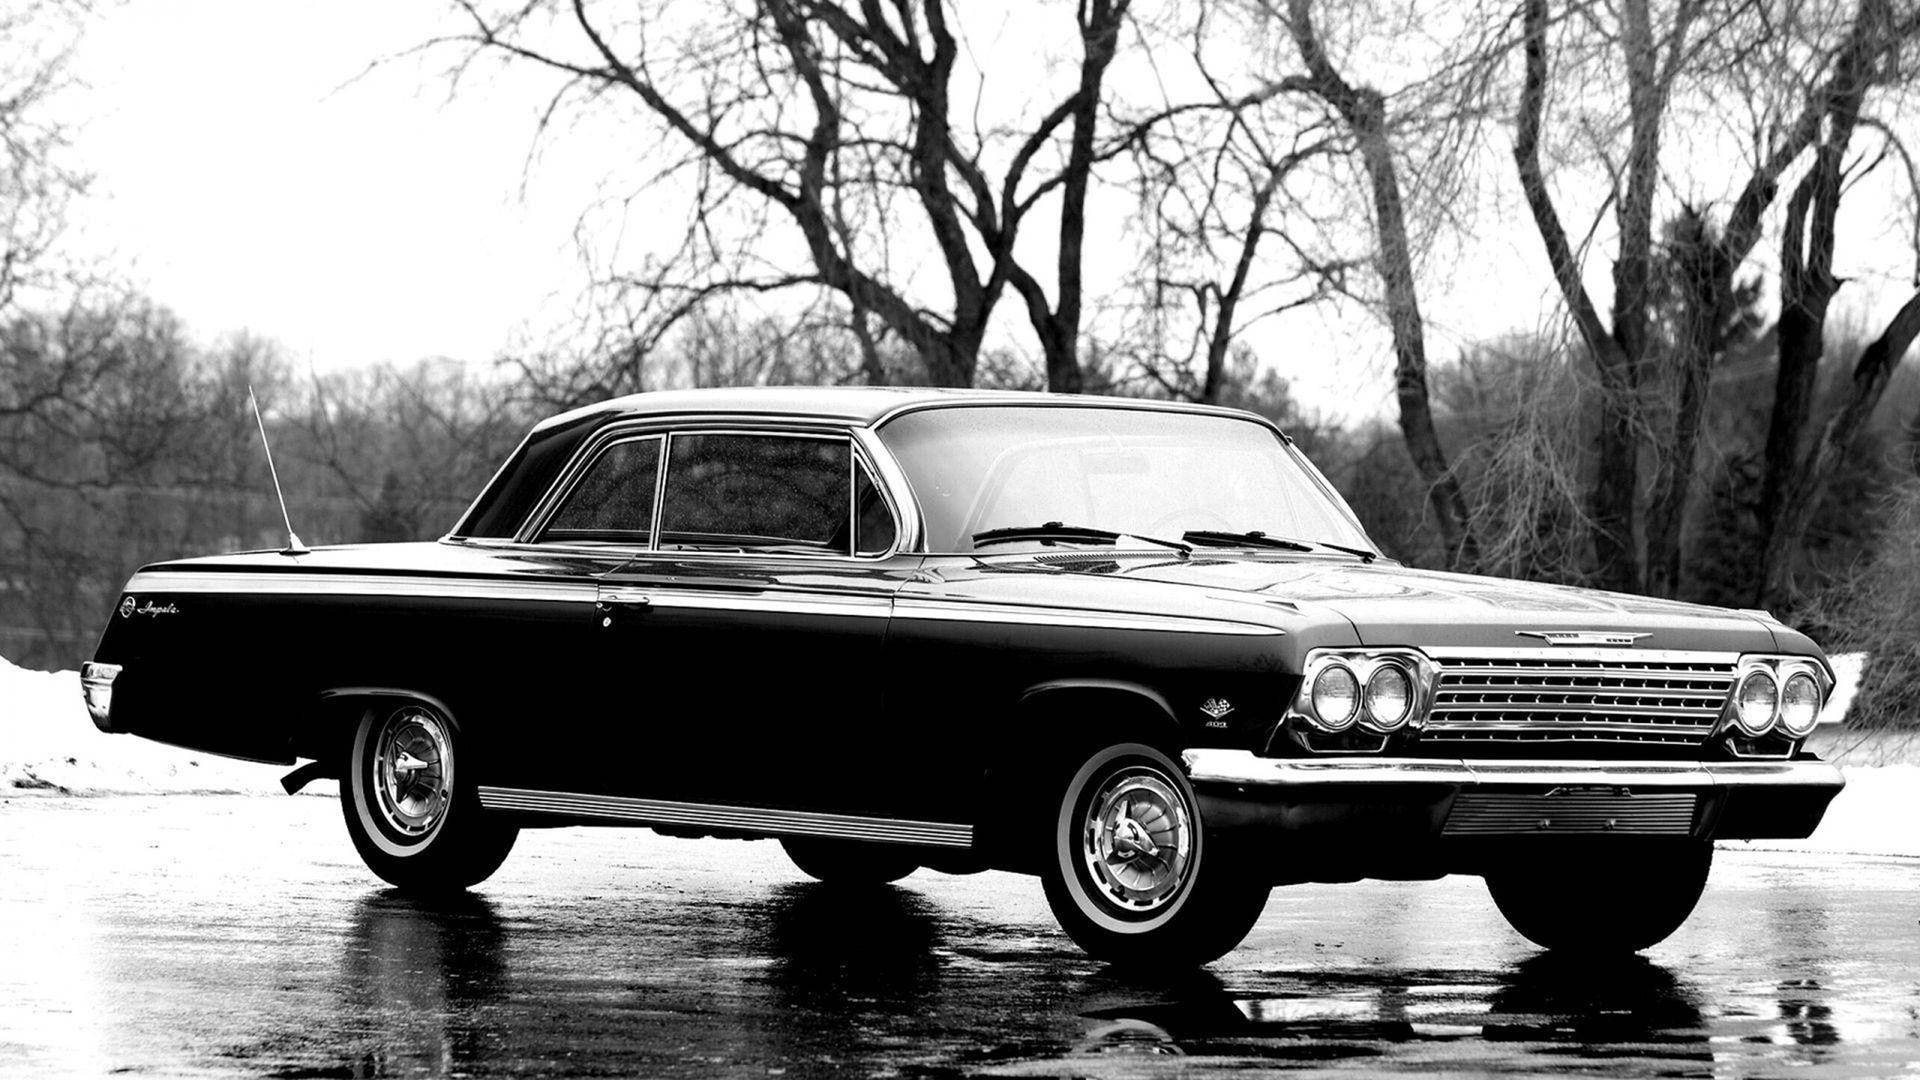 Chevroletimpala 1967 Im Winter. Wallpaper